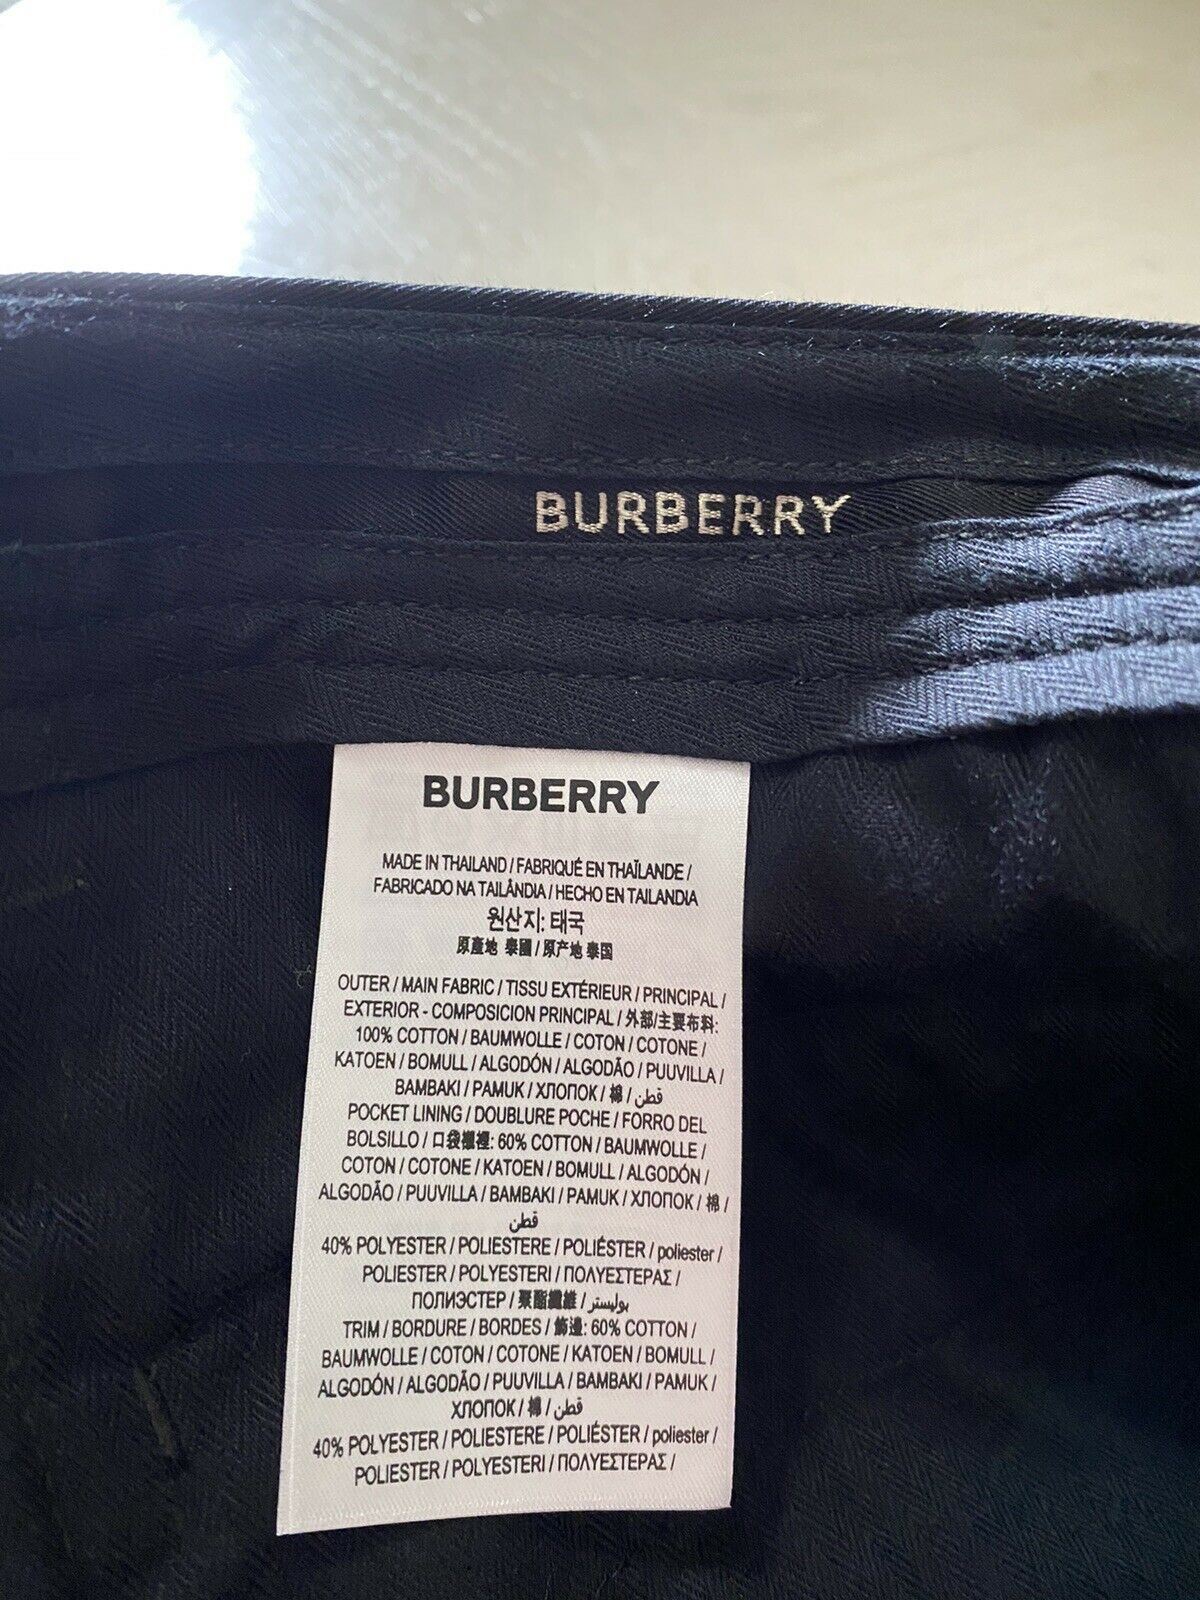 NWT $550 Burberry Men’s Short pants Black Size 34 US ( 50 Eu )